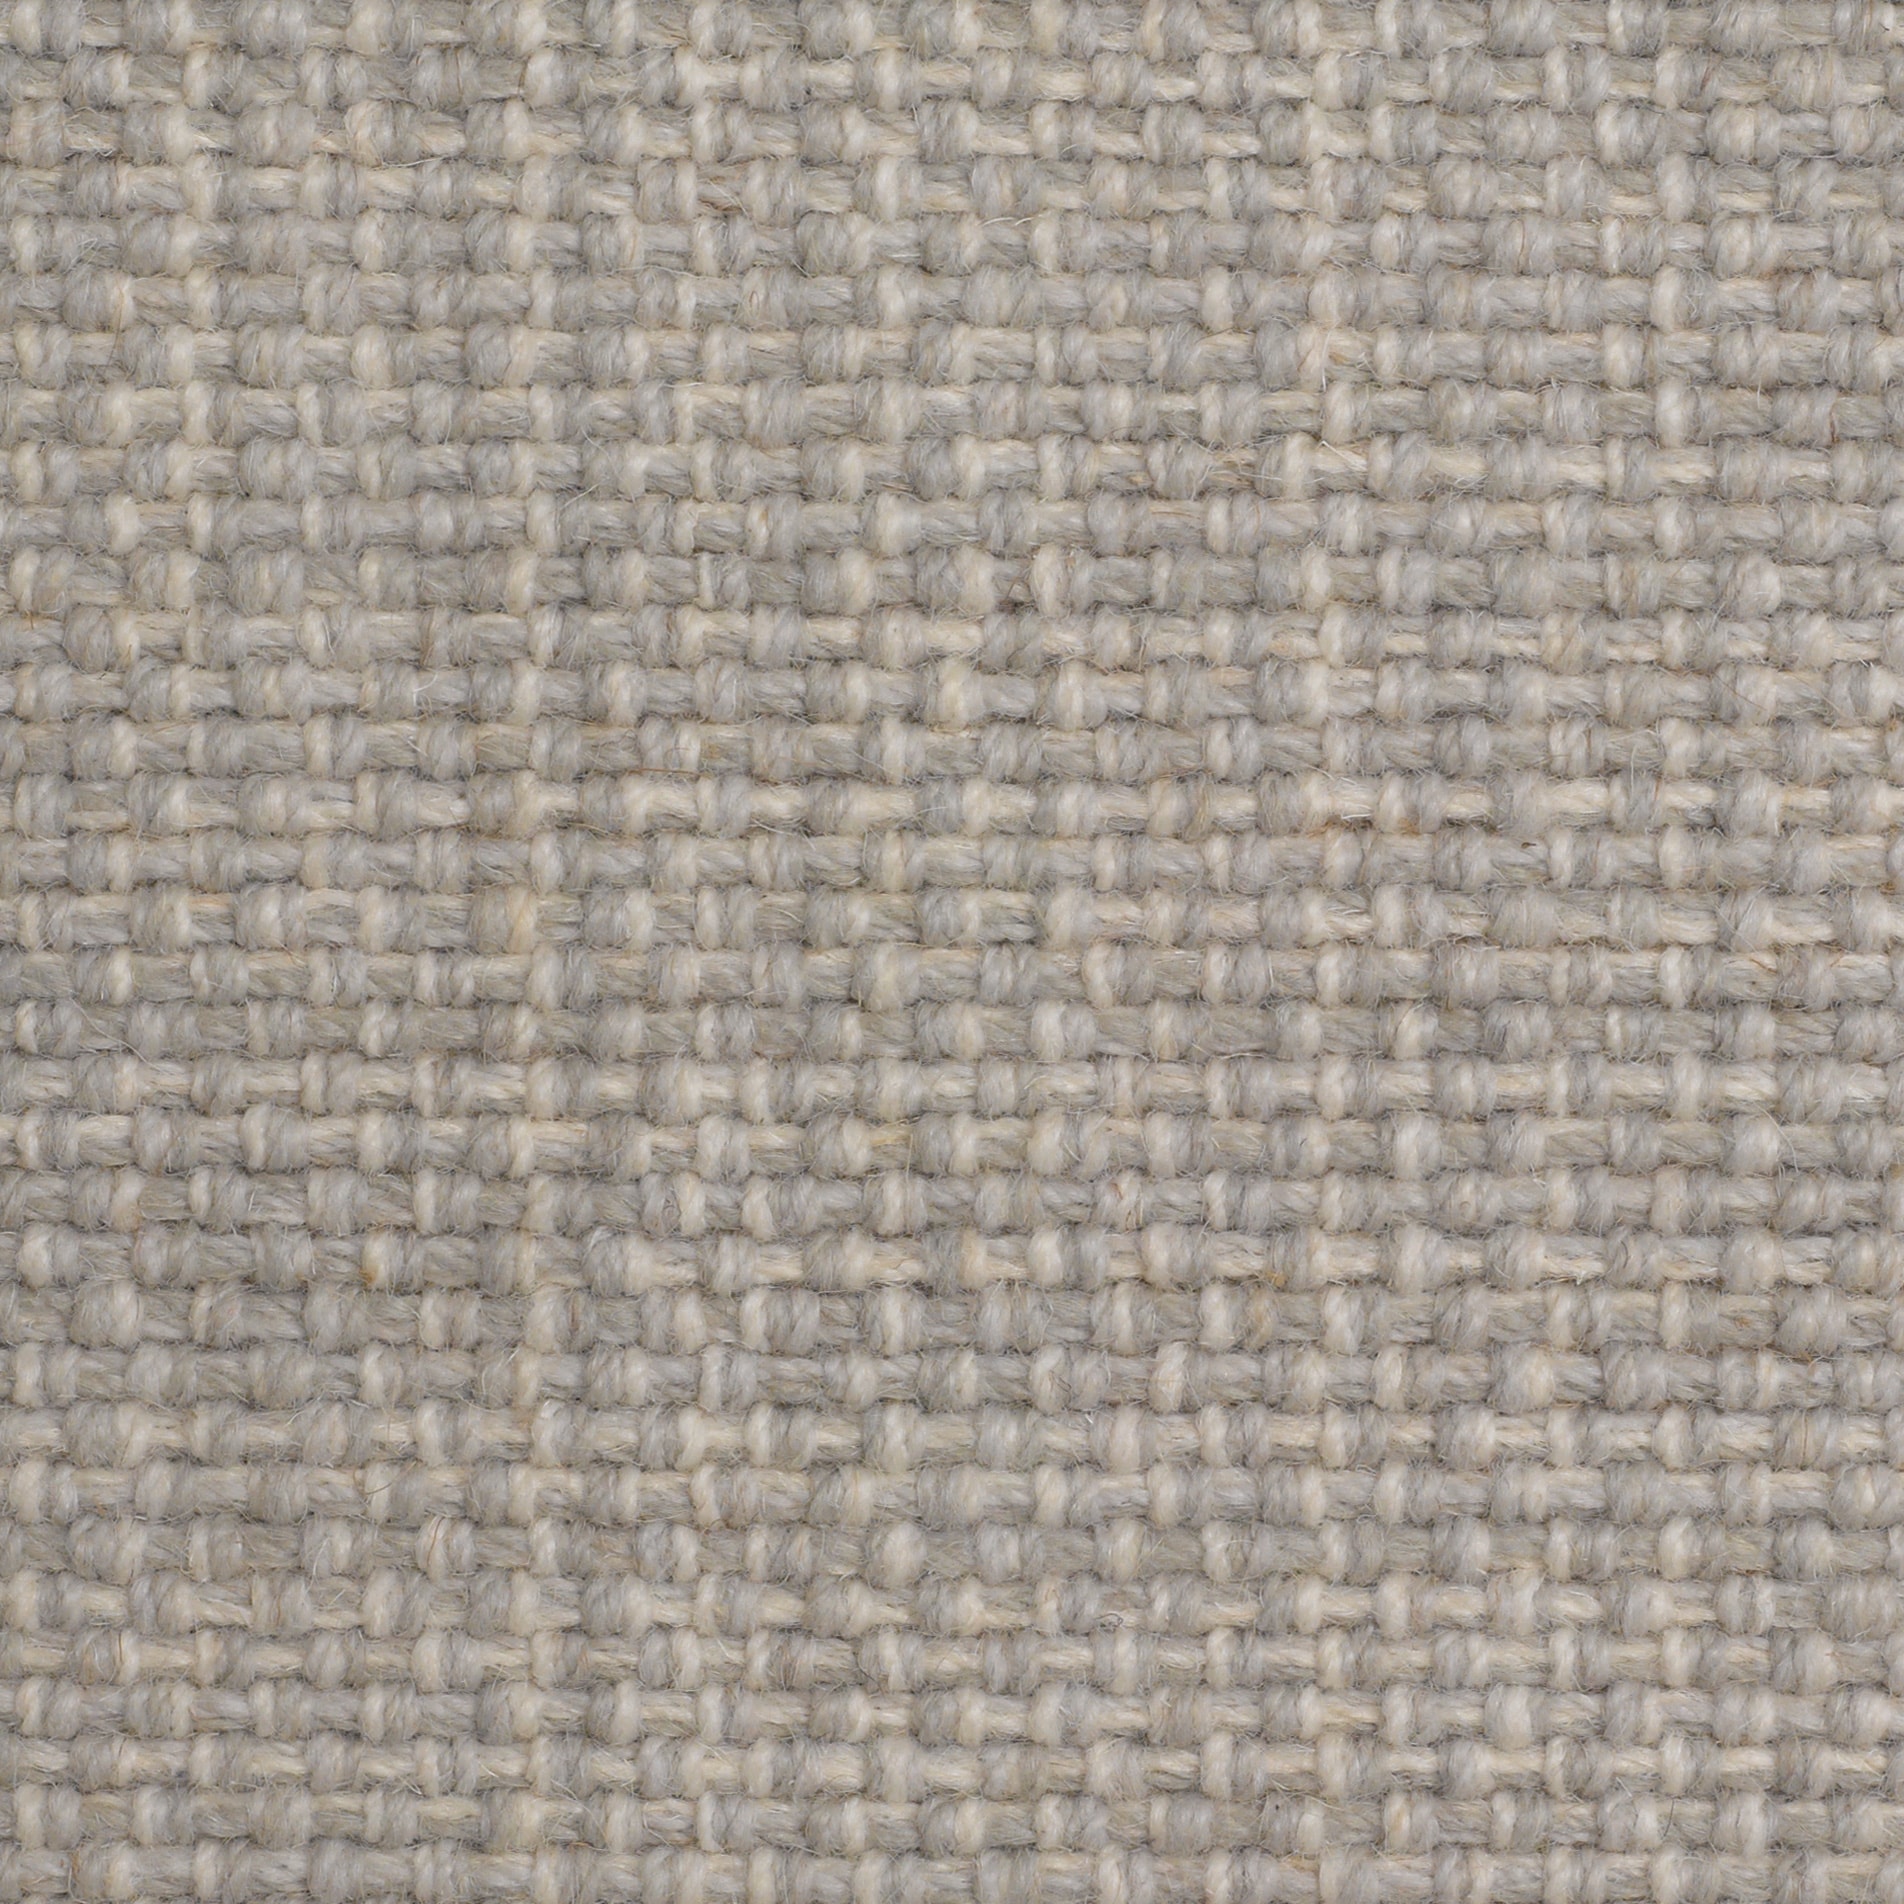 Capri: Natural Cotton - 100% Wool Carpet